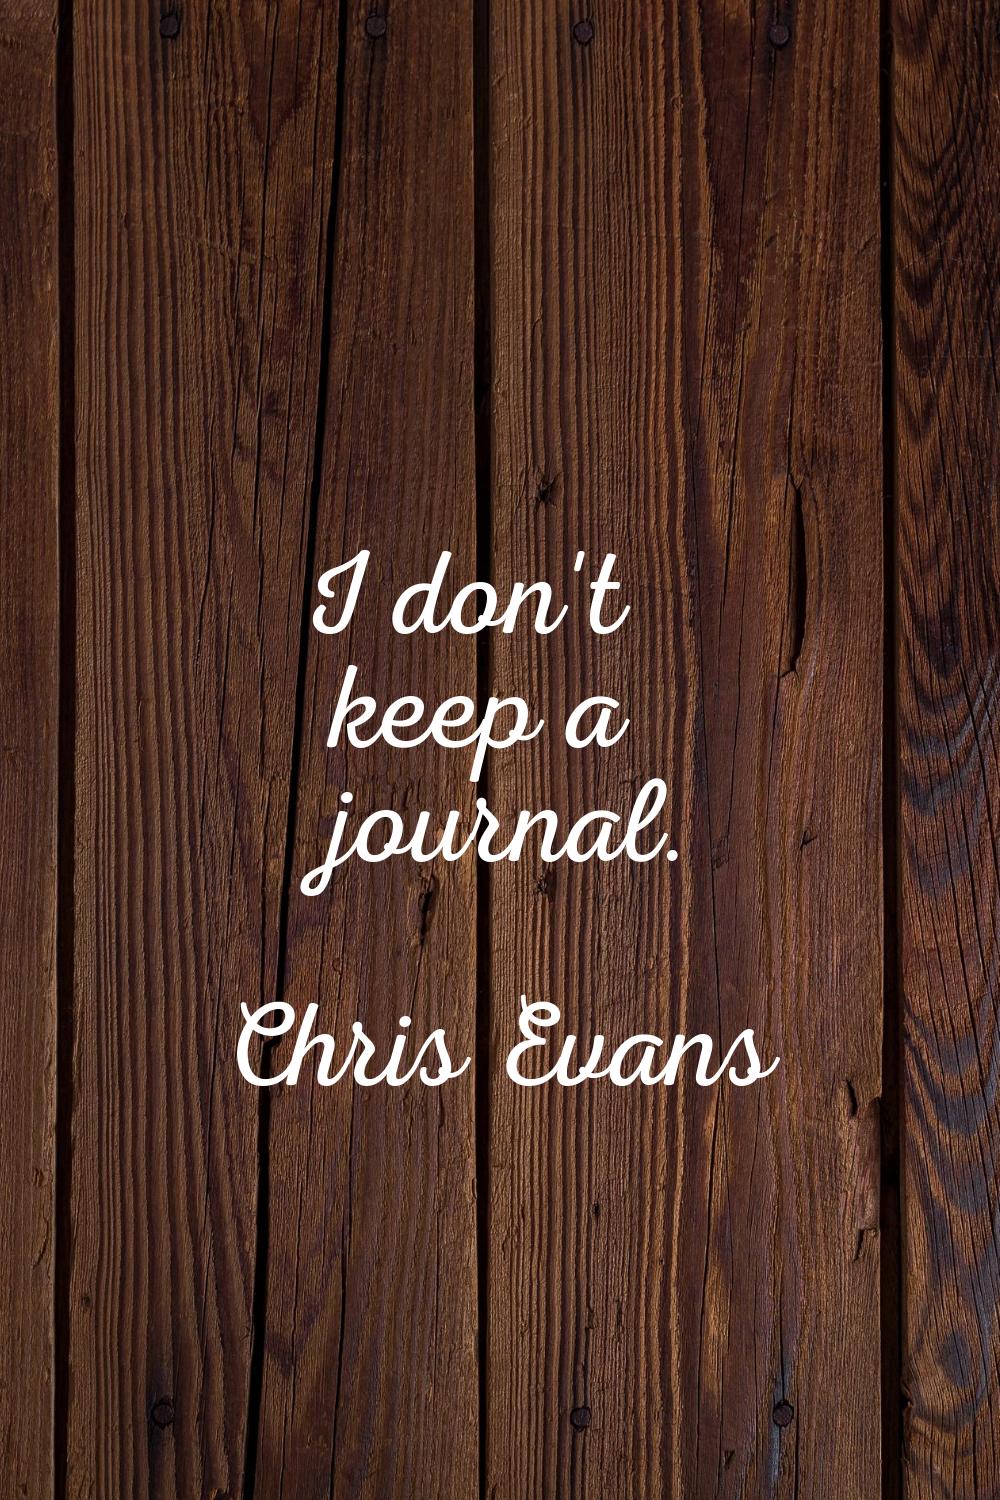 I don't keep a journal.